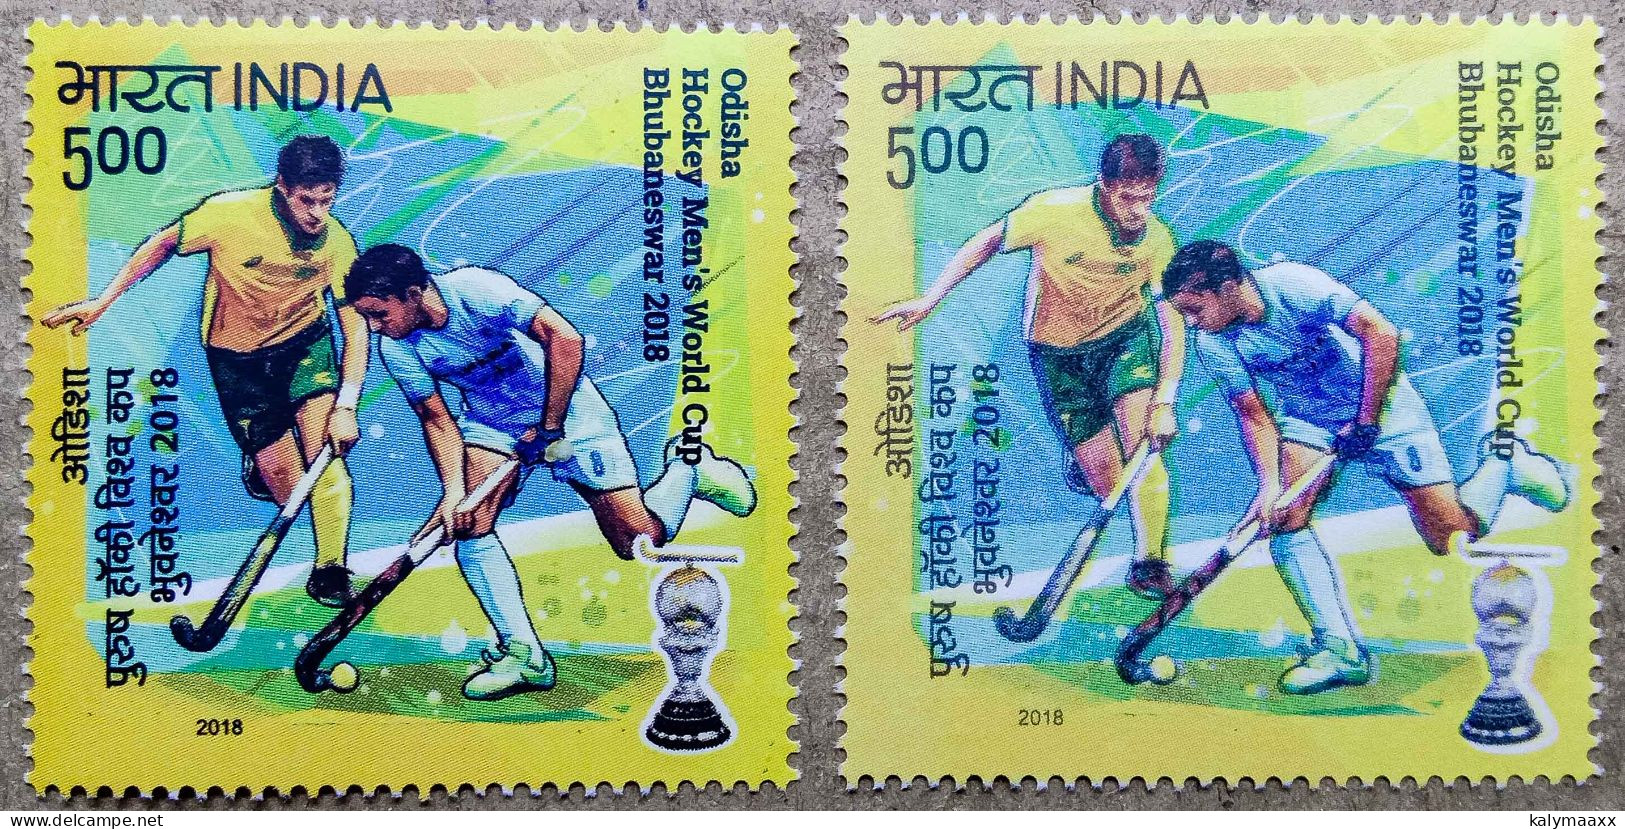 INDIA 2018 HOCKEY MEN'S WORLDCUP, DRY PRINT ERROR, DIFFERENT COLOUR SHADE ERROR....MNH - Hockey (Field)